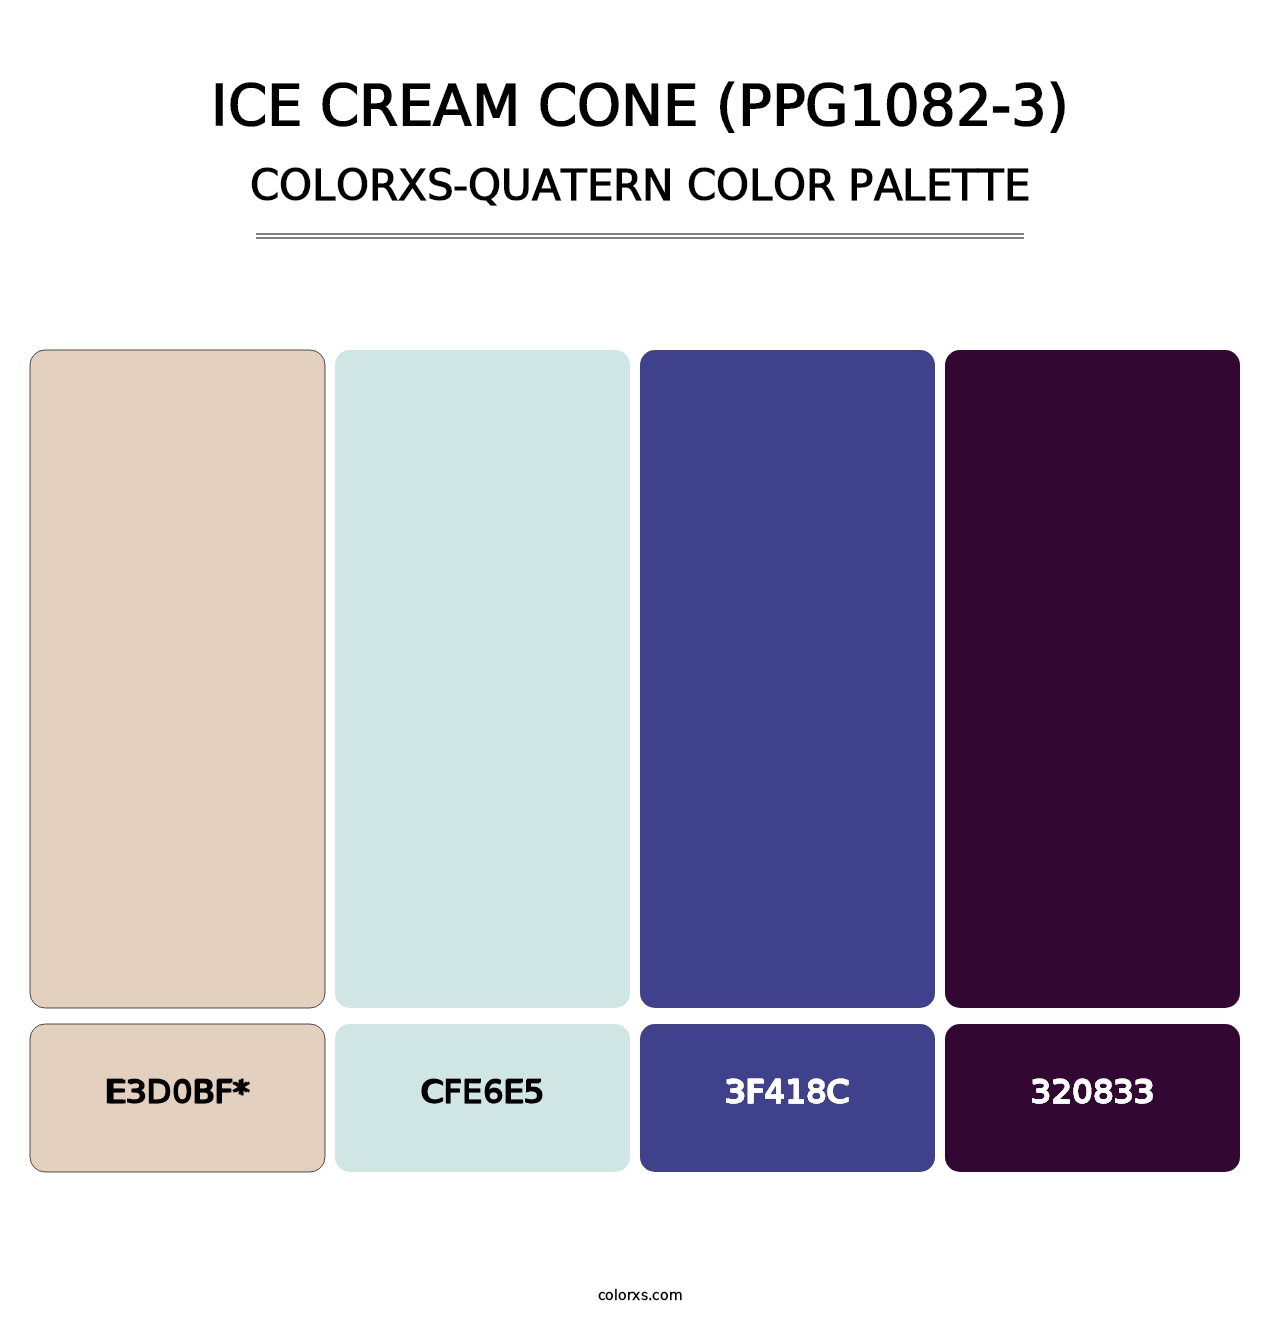 Ice Cream Cone (PPG1082-3) - Colorxs Quatern Palette